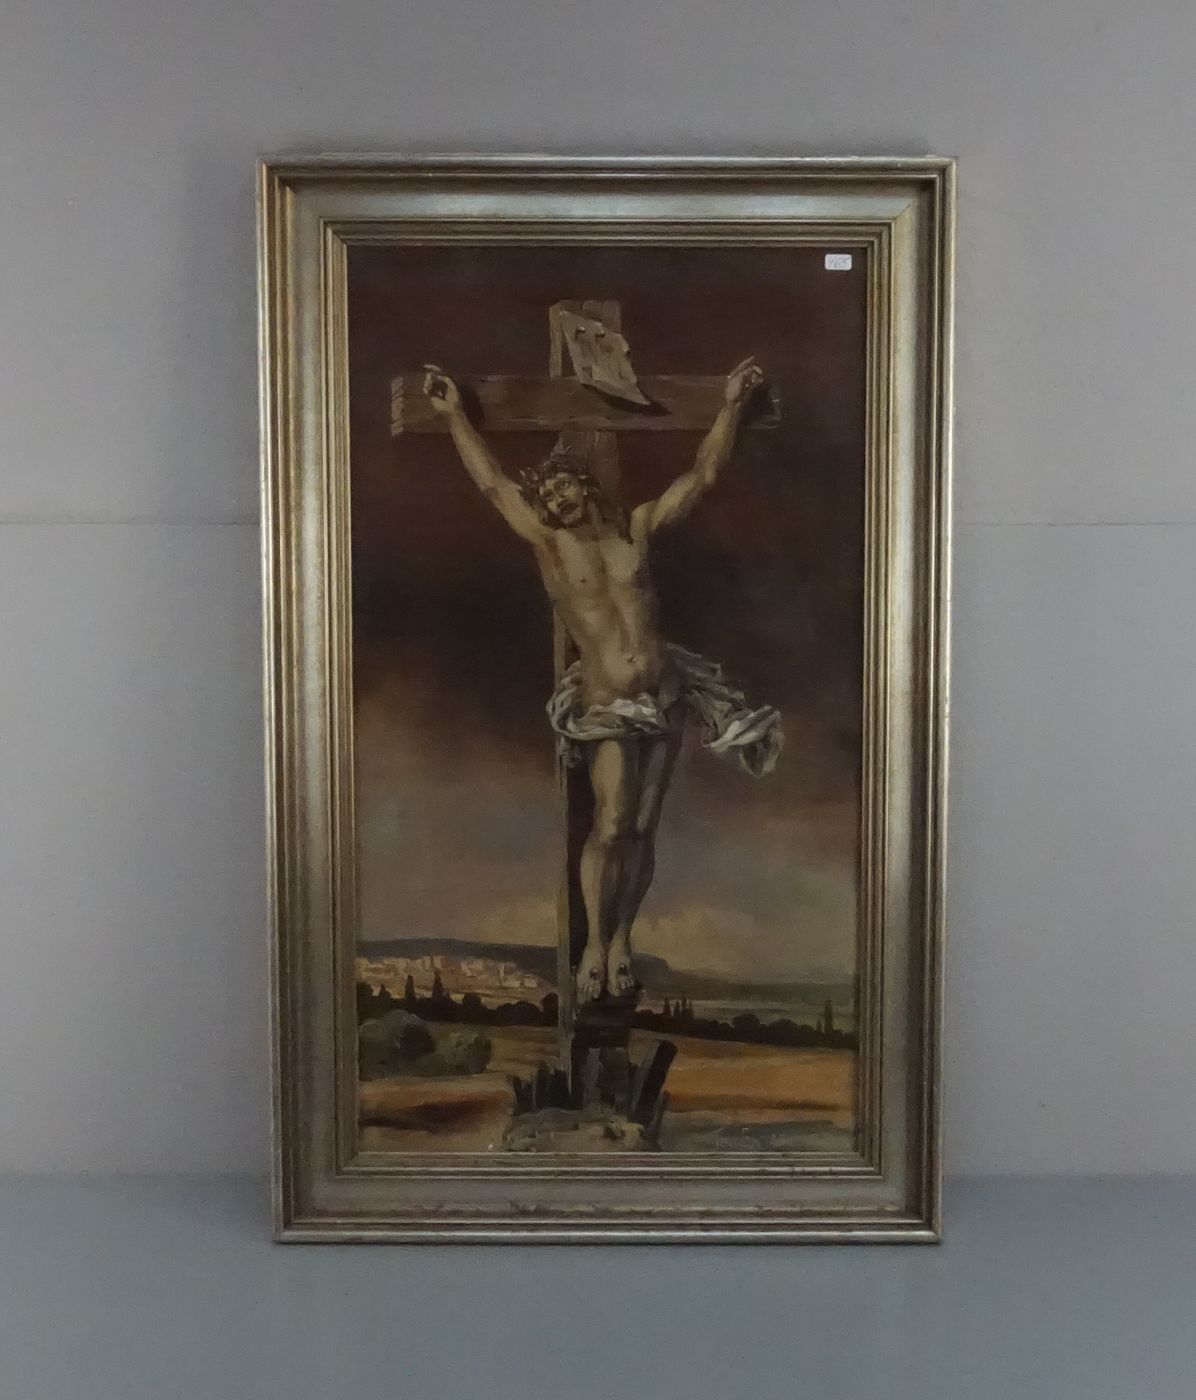 ERHARD, TONI (Süddeutscher Maler des 19./20. Jh.), Gemälde / painting: "Kreuzigungsszene",